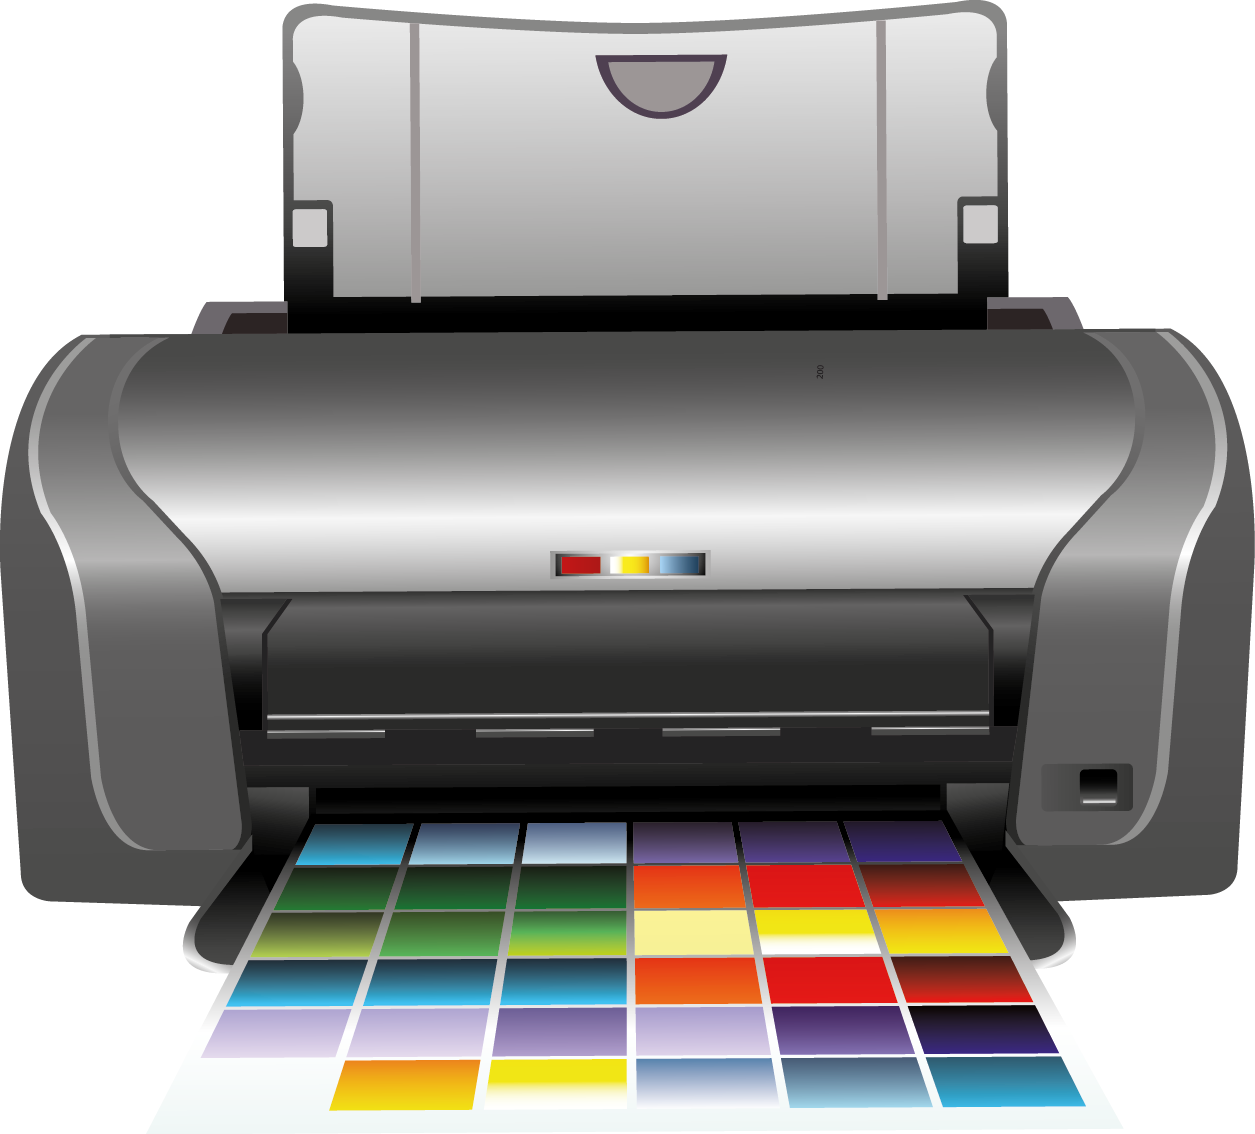 Votv printer. Принтер. Печать на принтере. Цветная печать. Печать на струйном принтере.